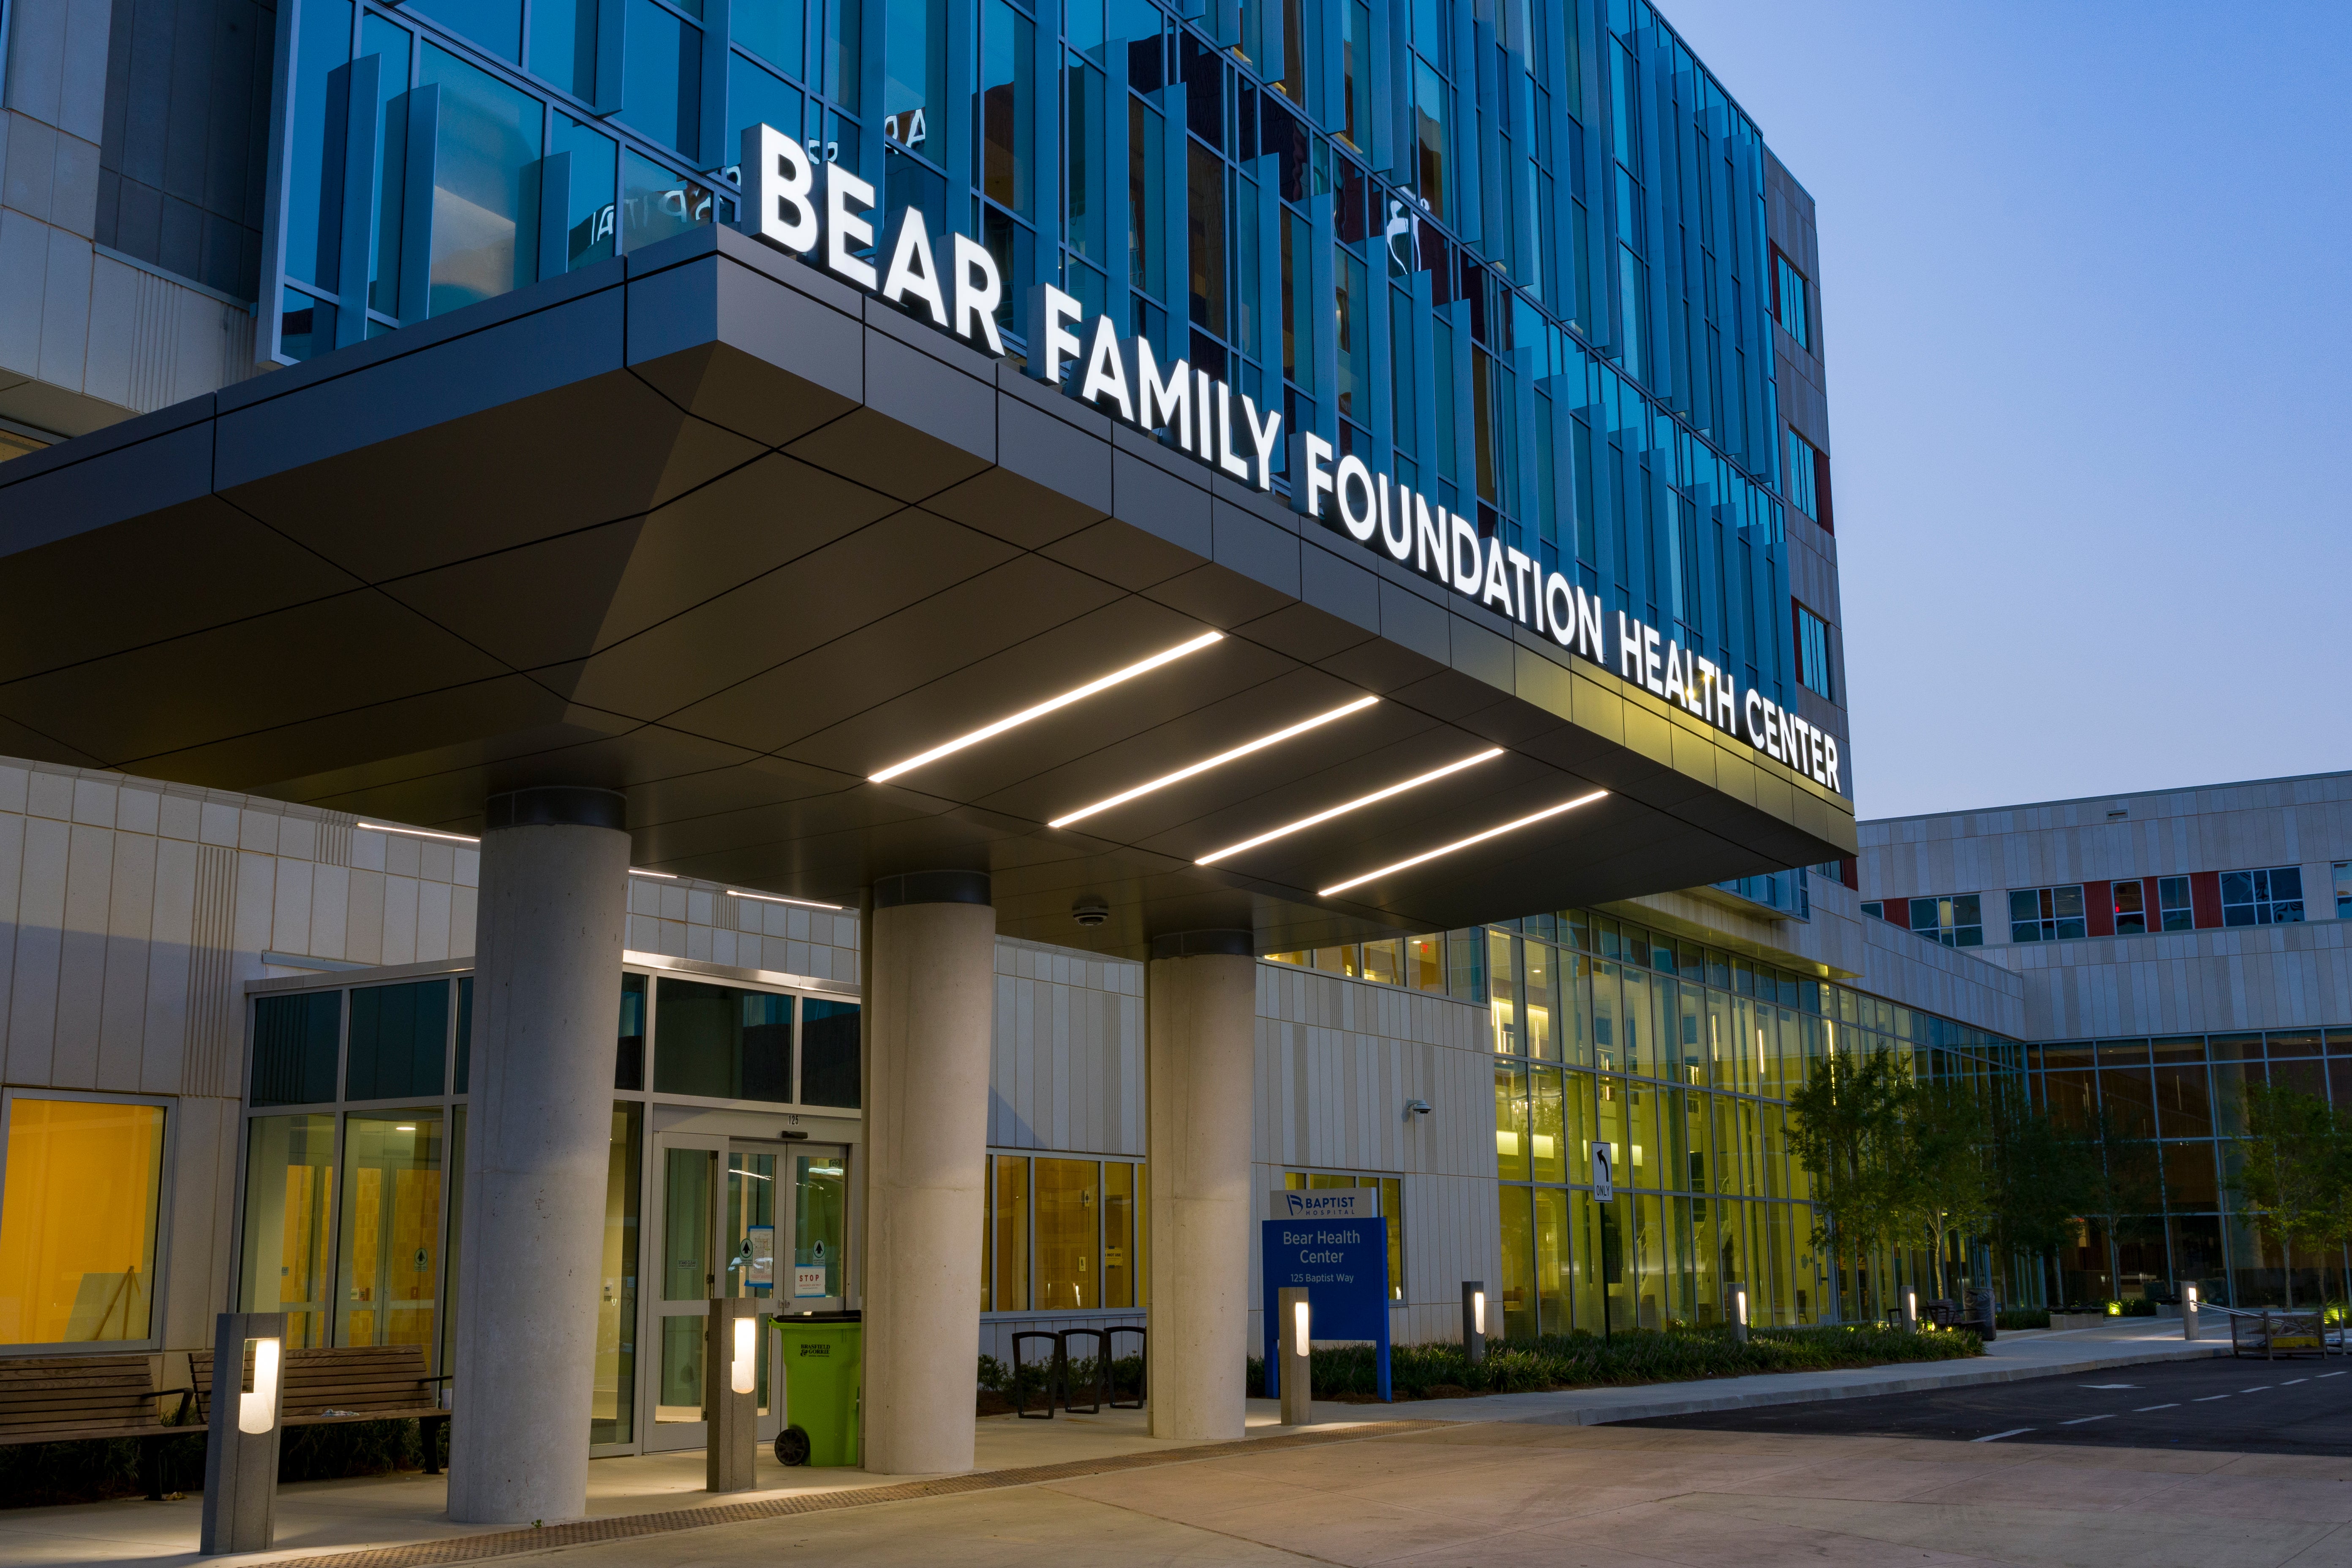 Bear Family Foundation Health Center